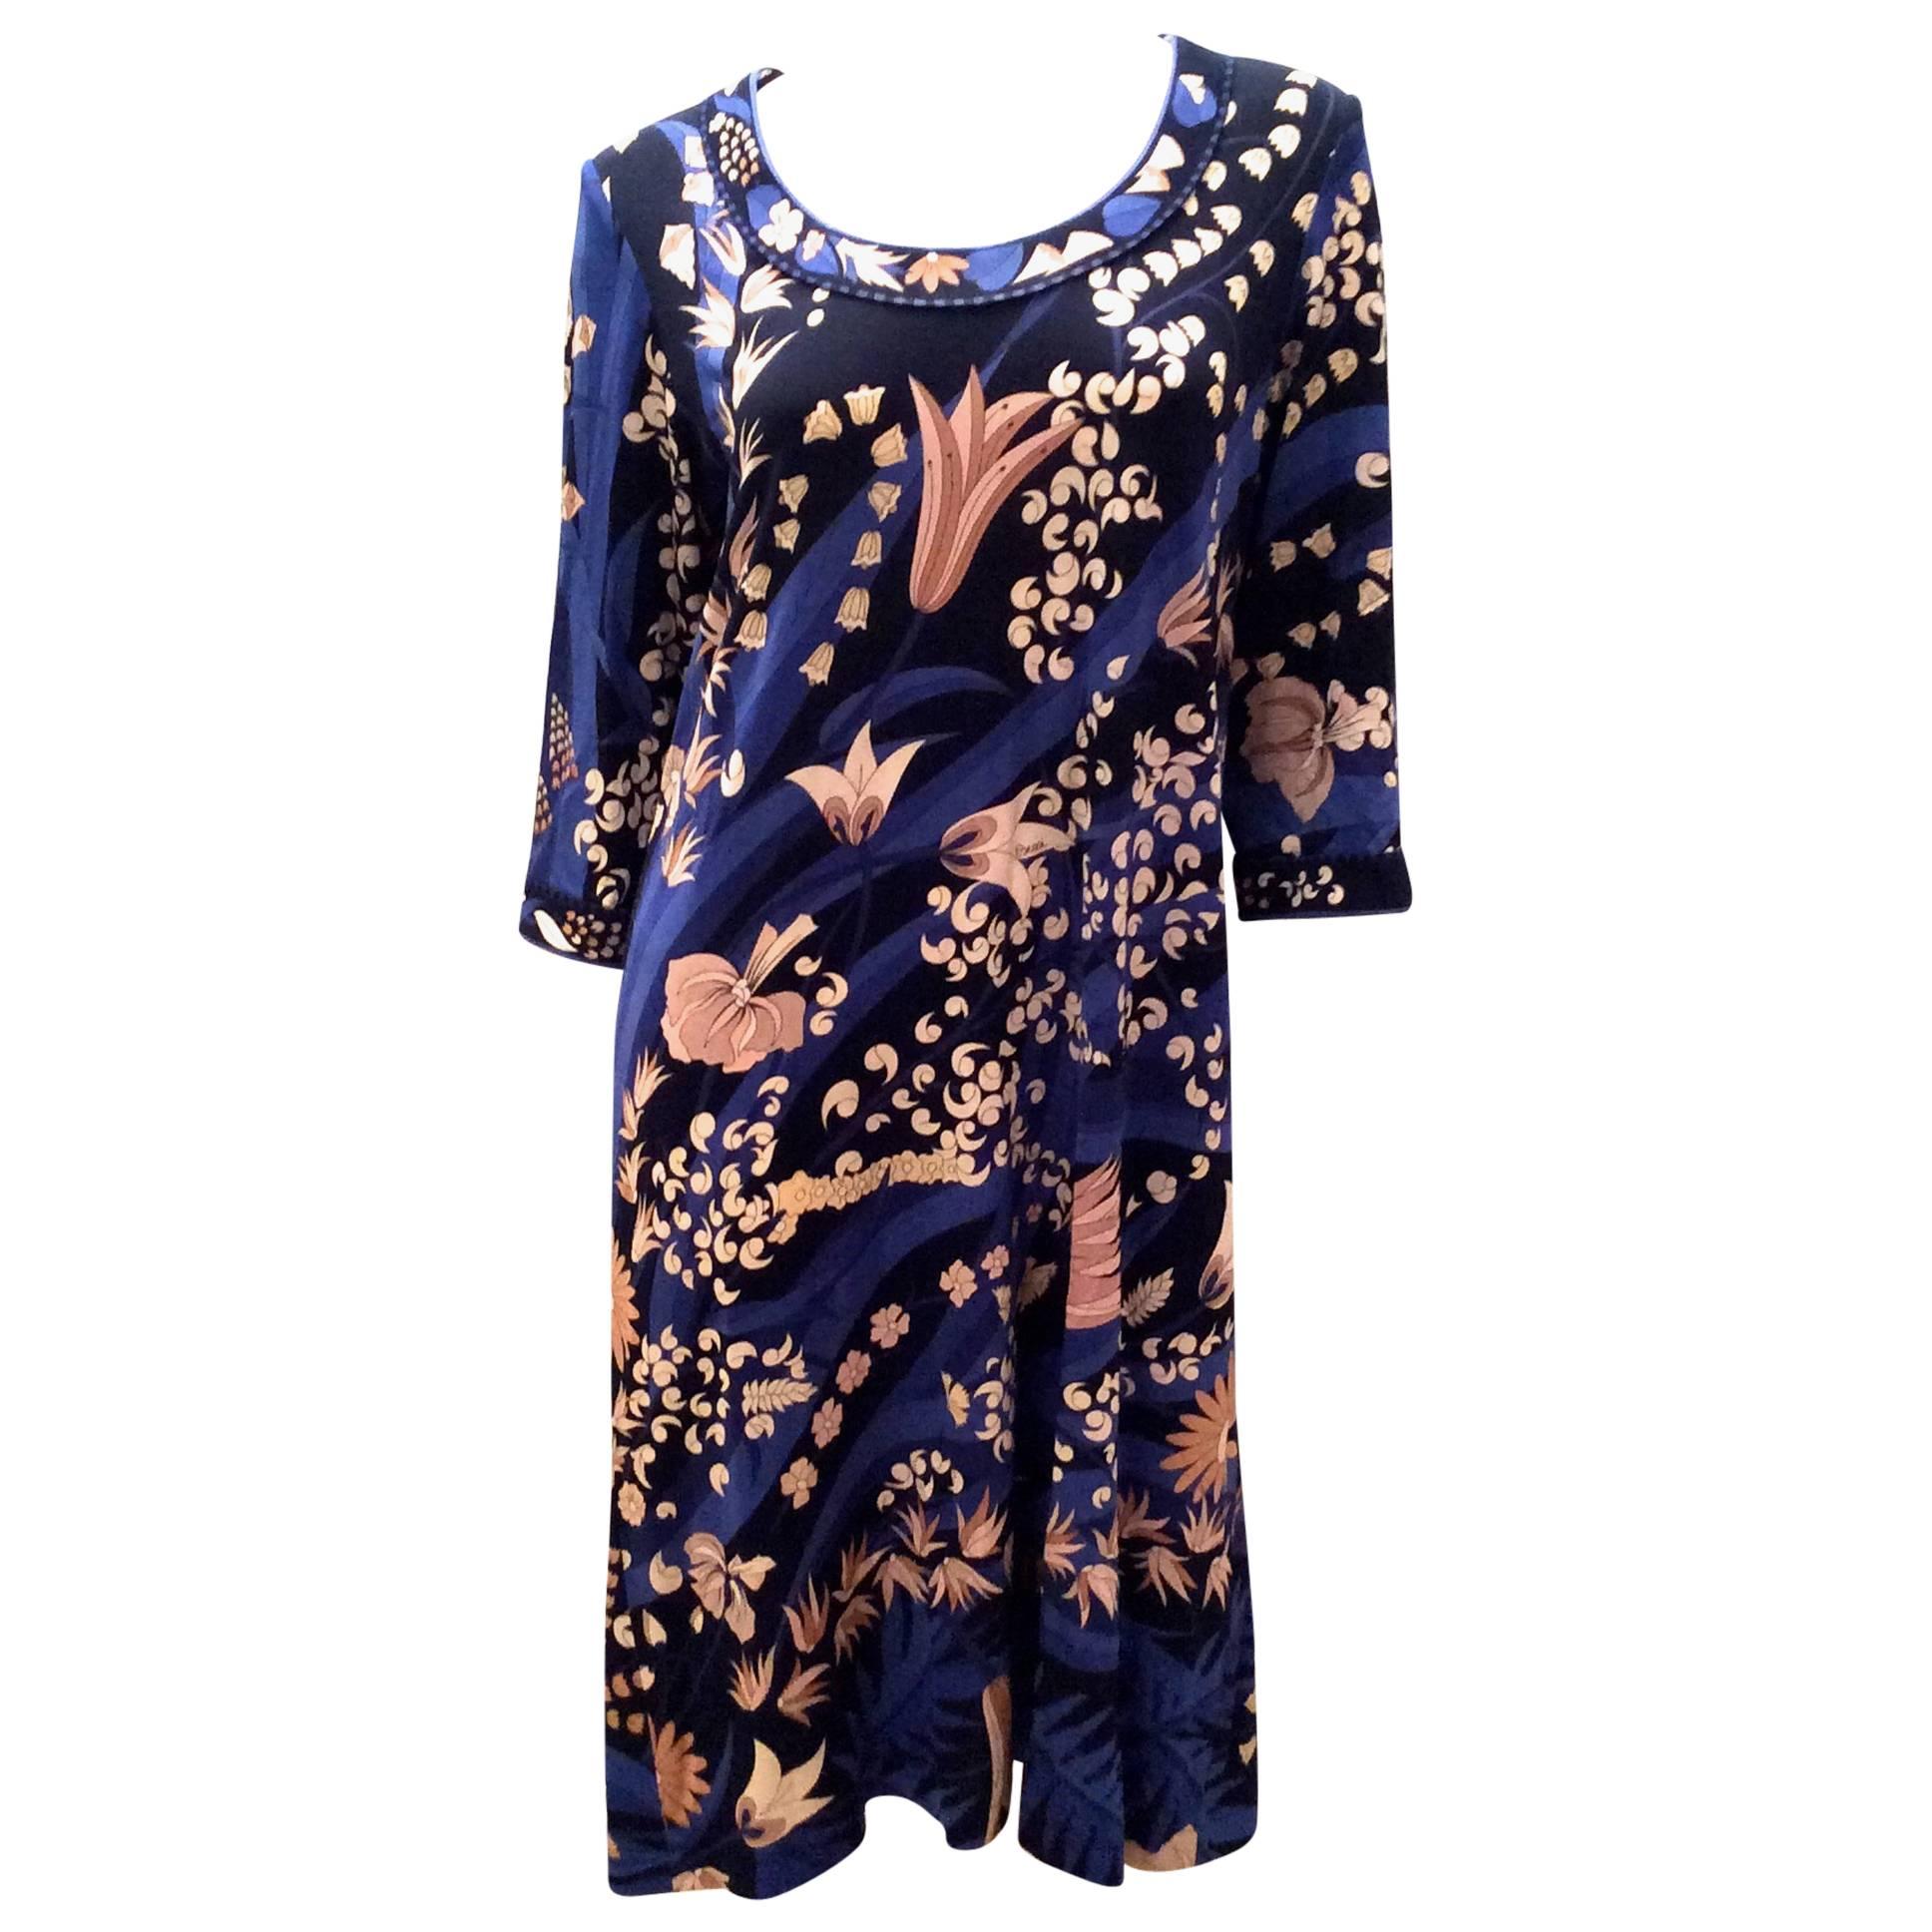 Averardo Bessi Dress - NWT  For Sale